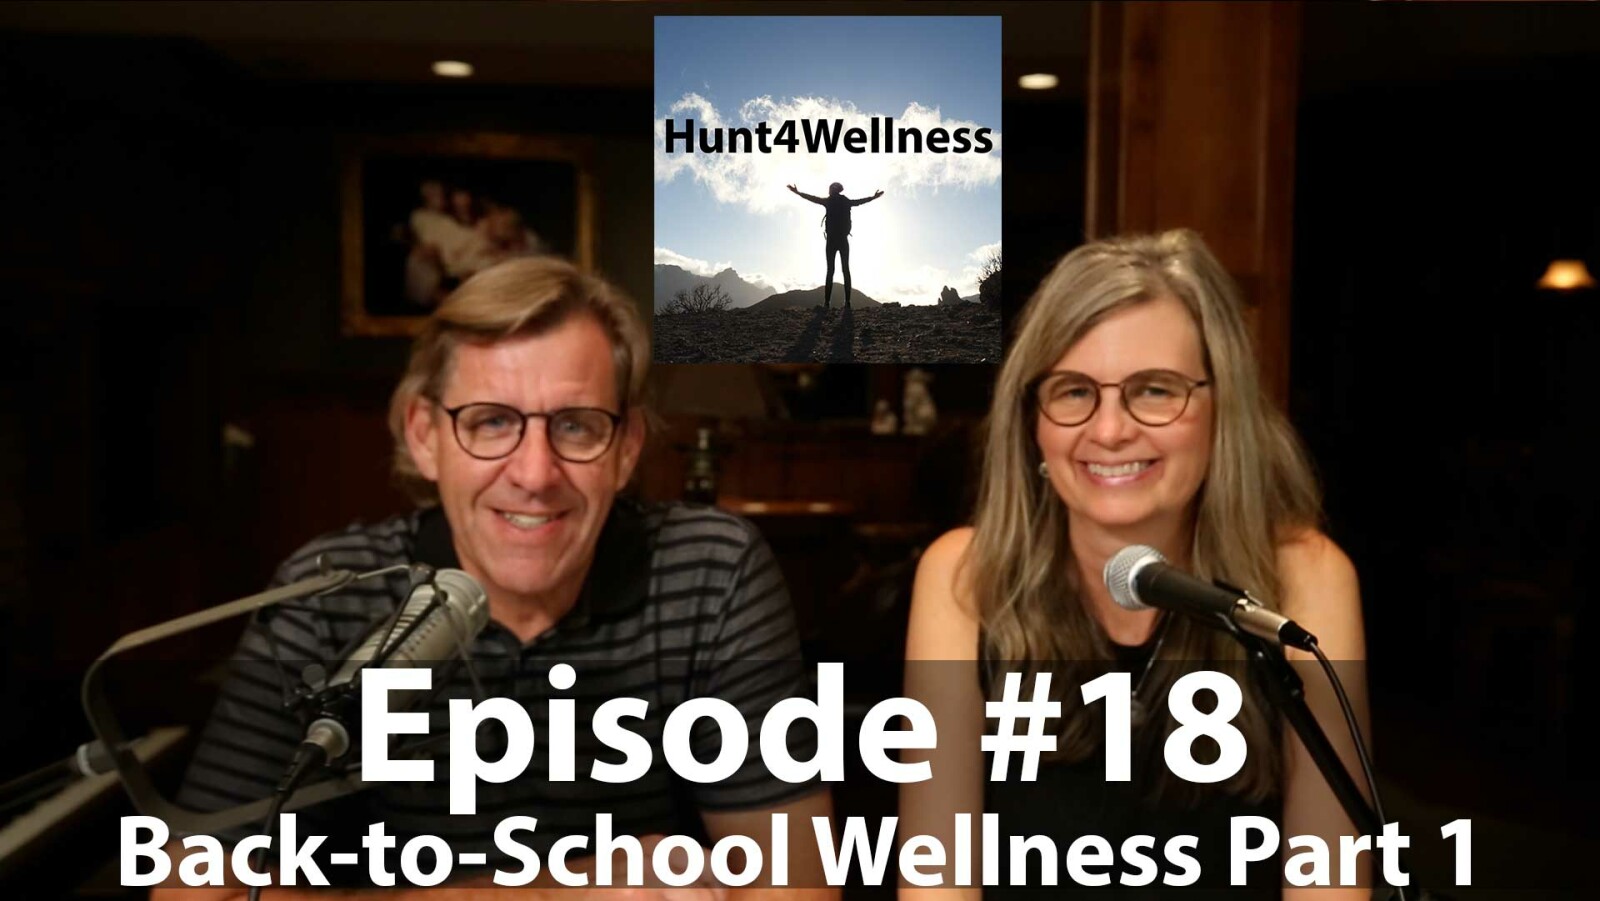 Episode #18 - Back-to-School Wellness Part 1